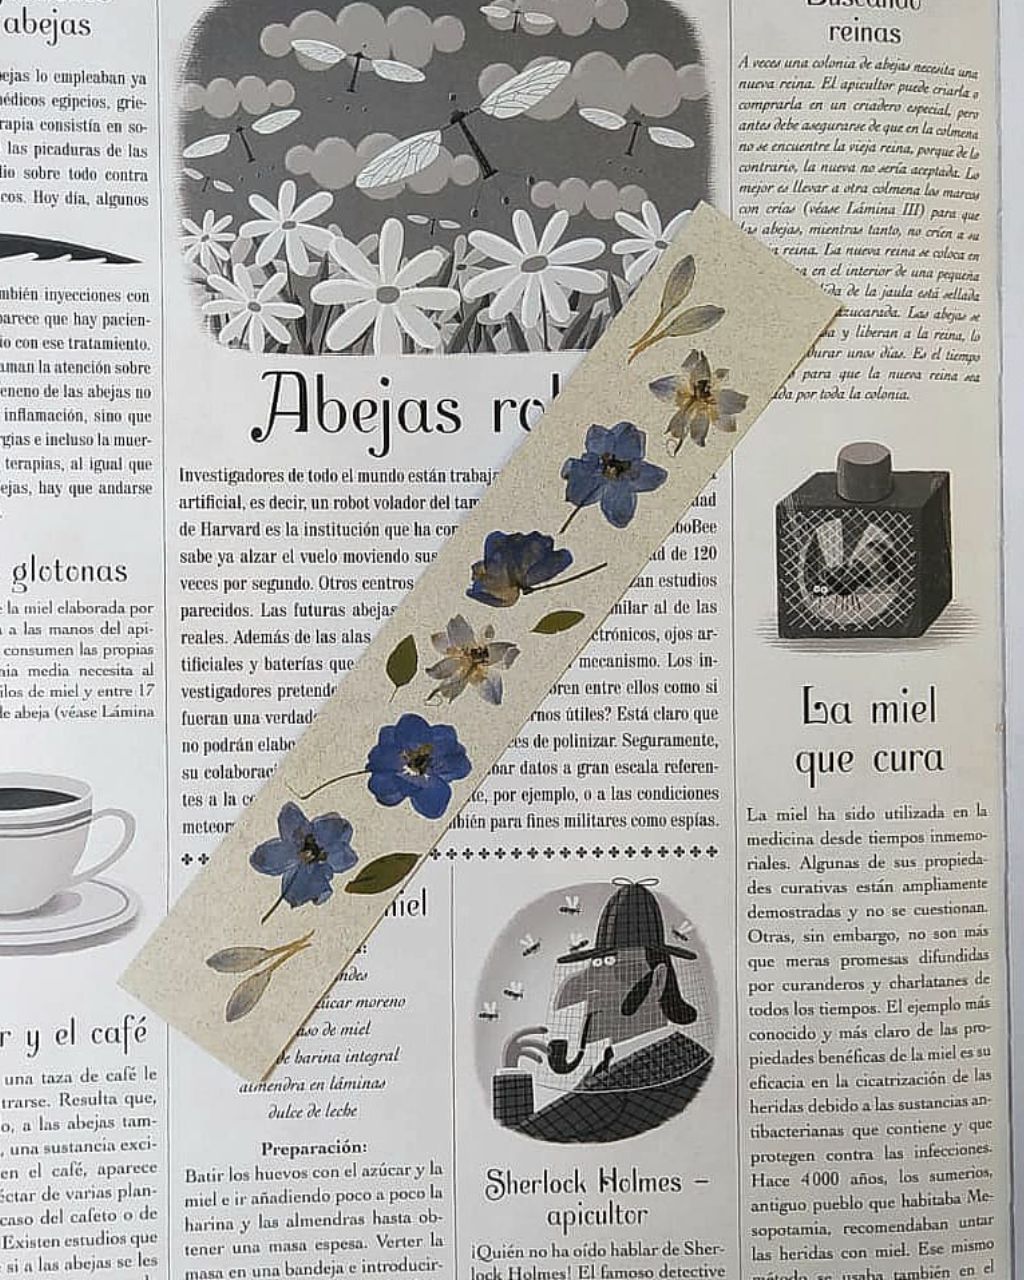 Bookmark con print de flores colombianas en tonos azules sobre papel color crudo.